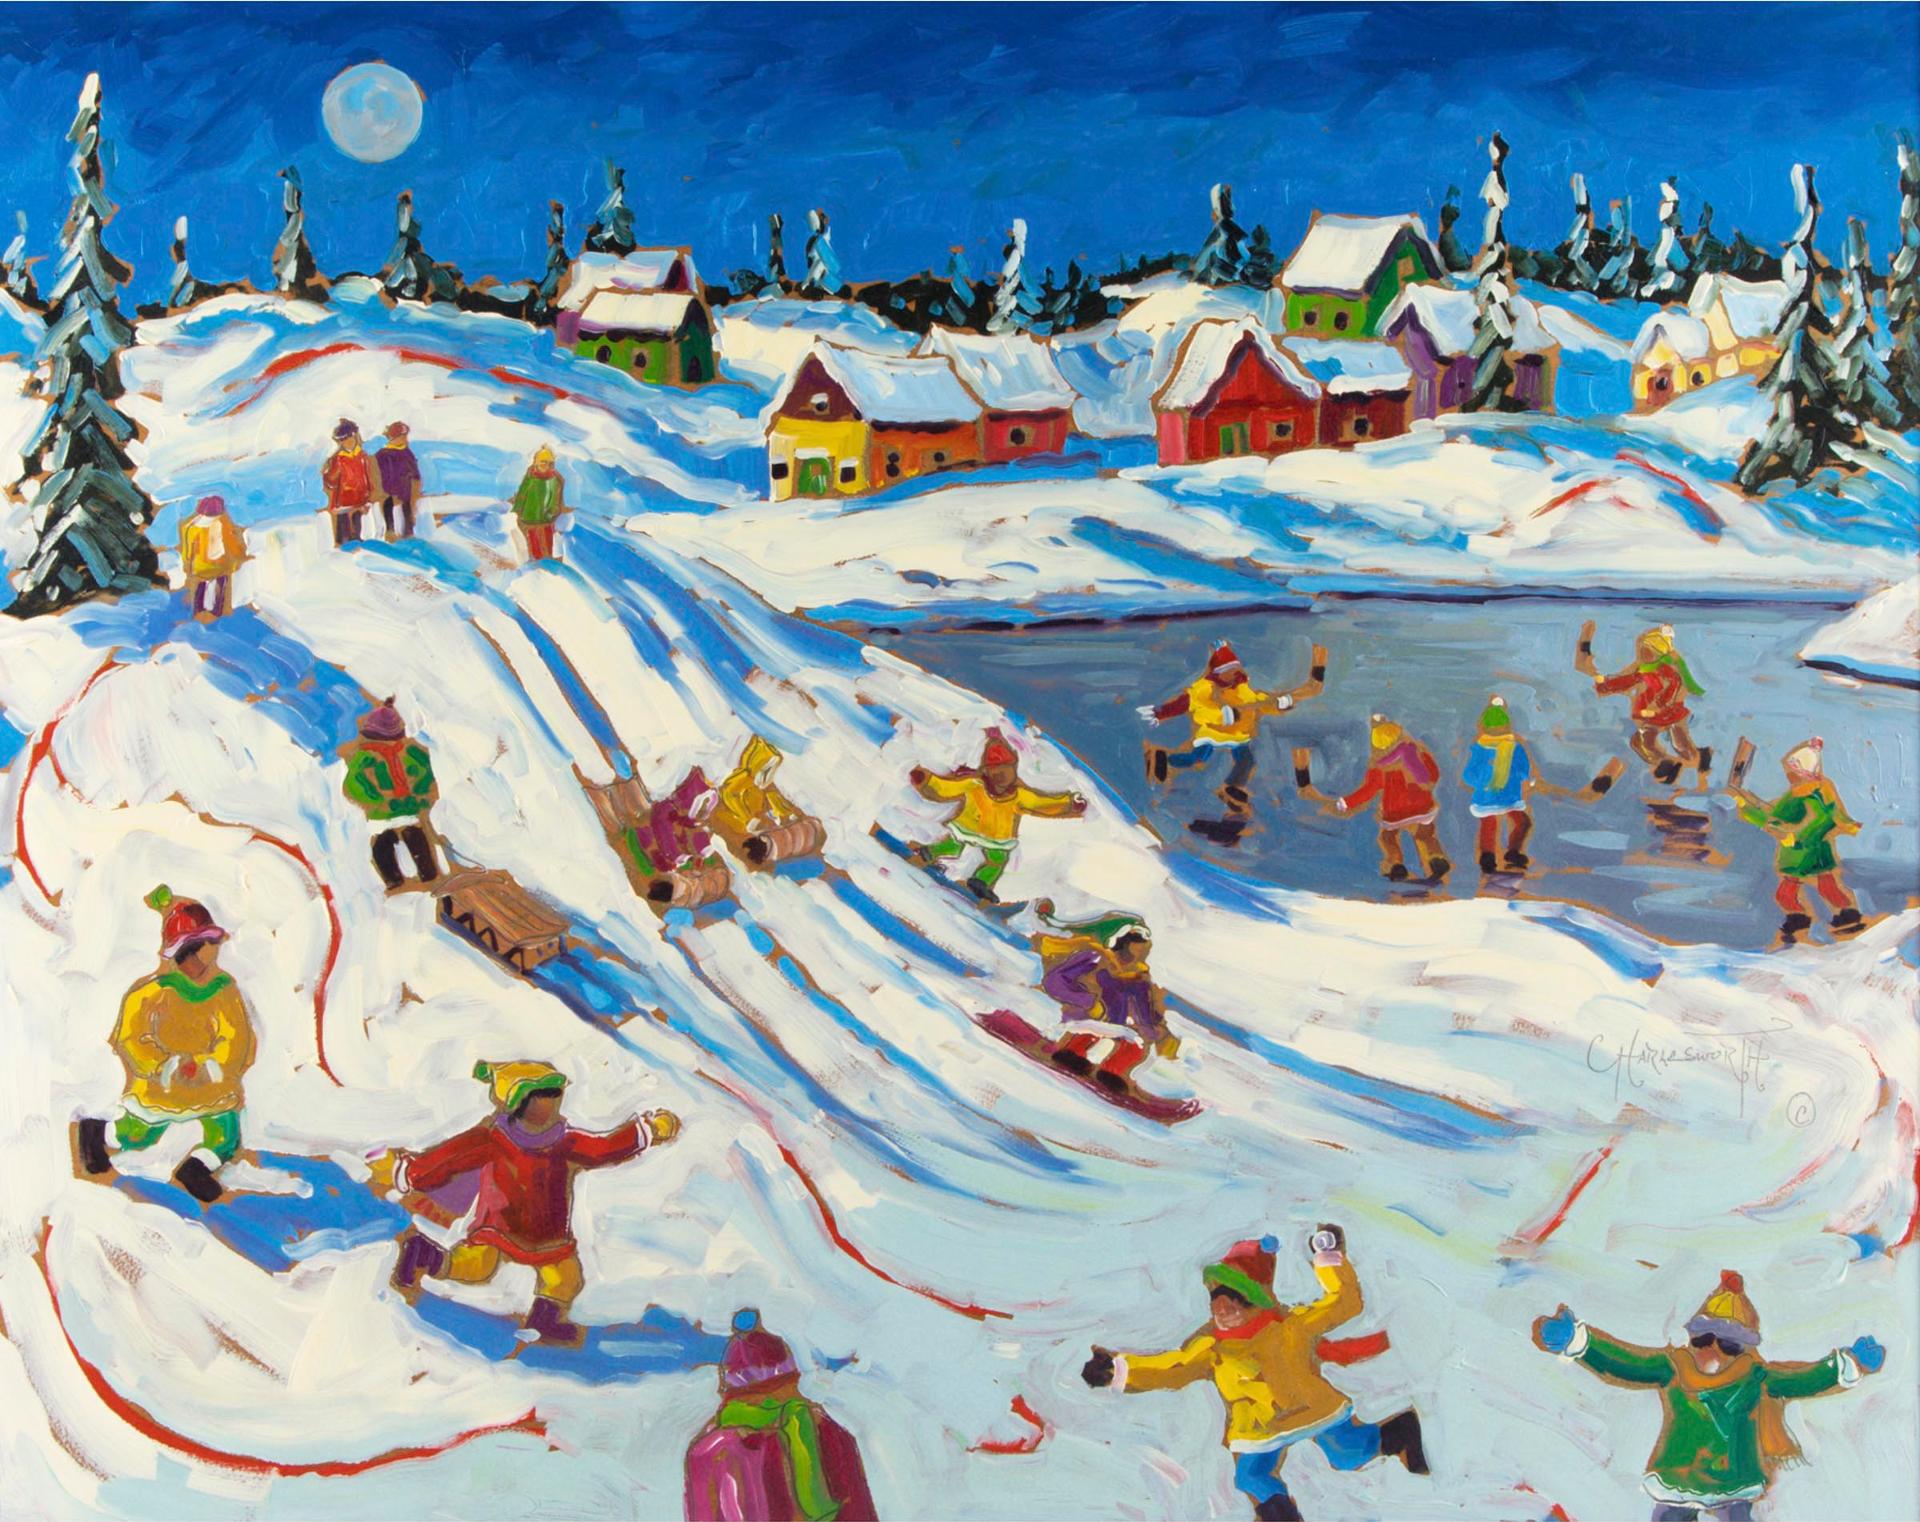 Rod Charlesworth (1955) - Winter Fun (Full Moon)